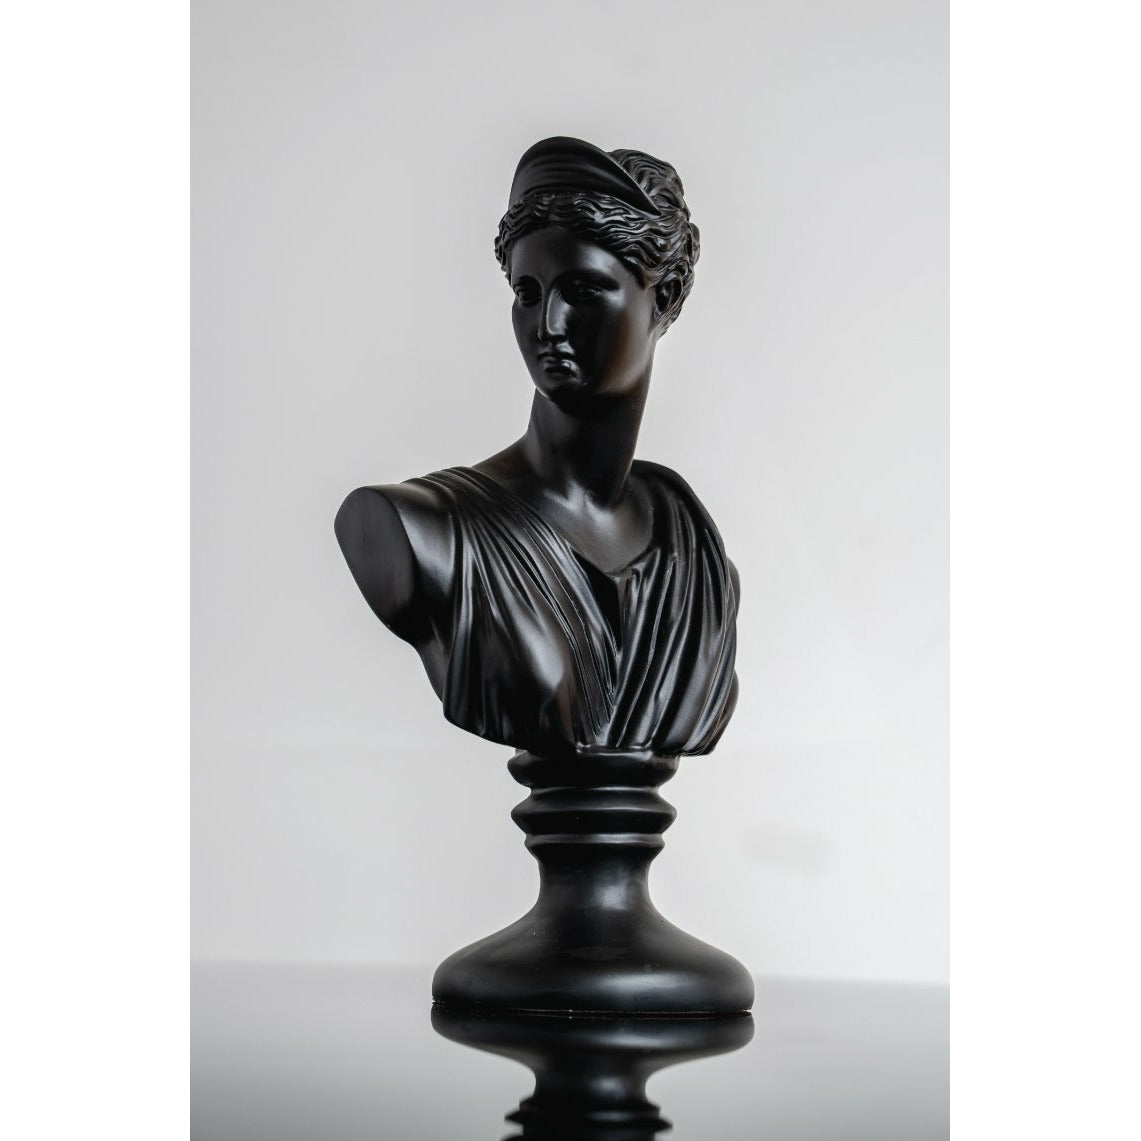 Black Venus Bust Sculpture - Our Black Venus Bust Sculpture is a timeless piece that’s an icon of Roman mythology.